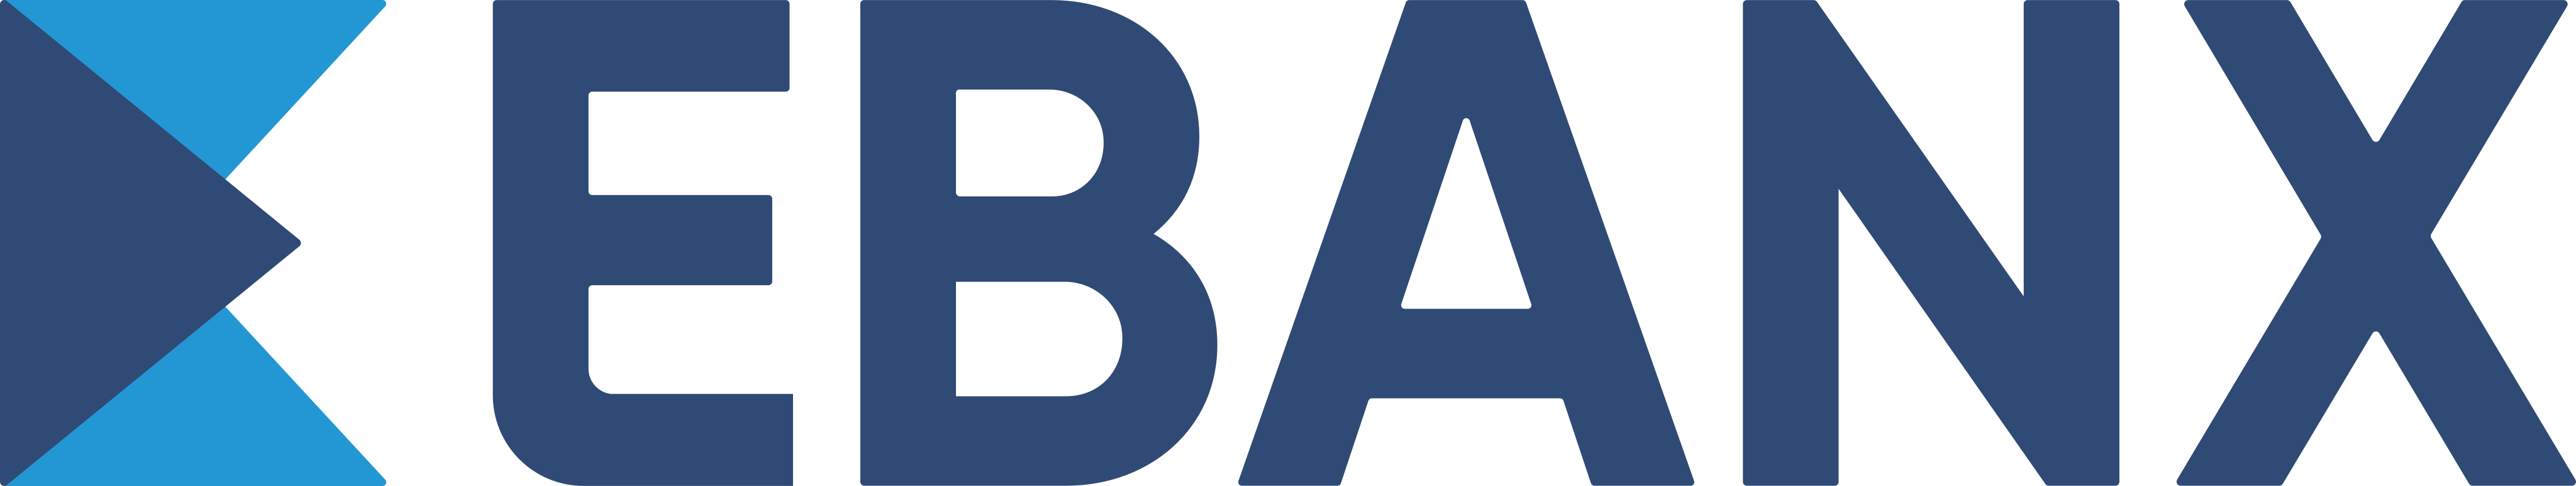 ebanx logo - EBANX Logo